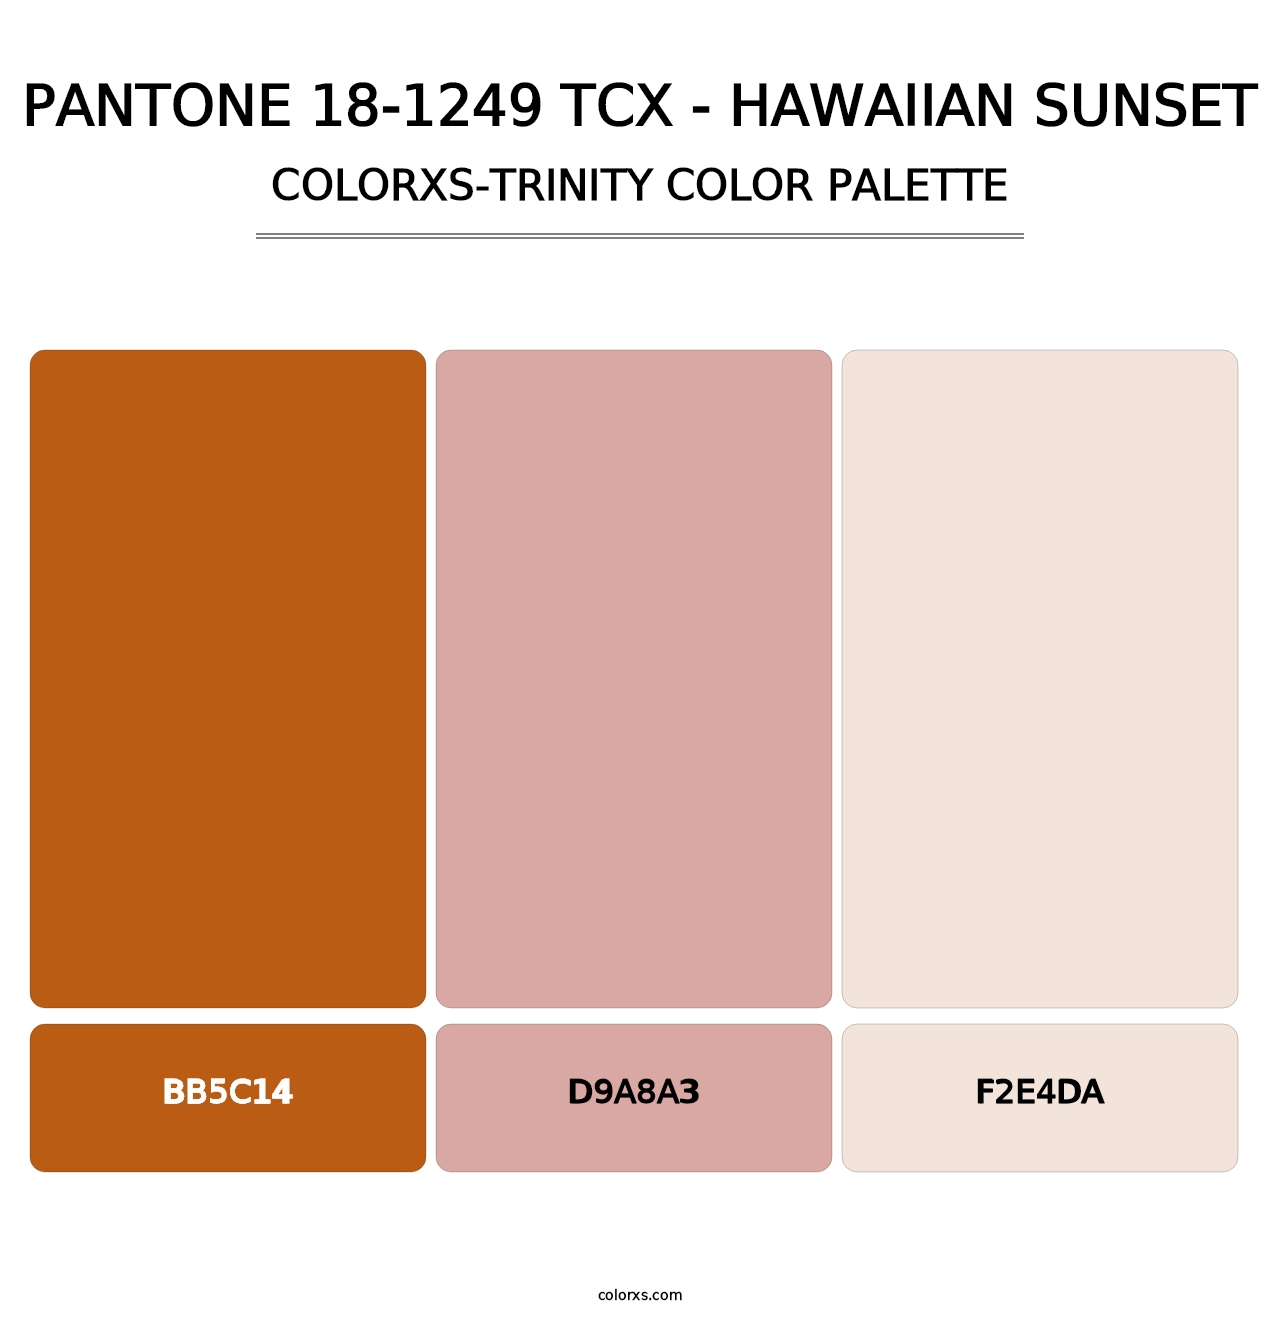 PANTONE 18-1249 TCX - Hawaiian Sunset - Colorxs Trinity Palette